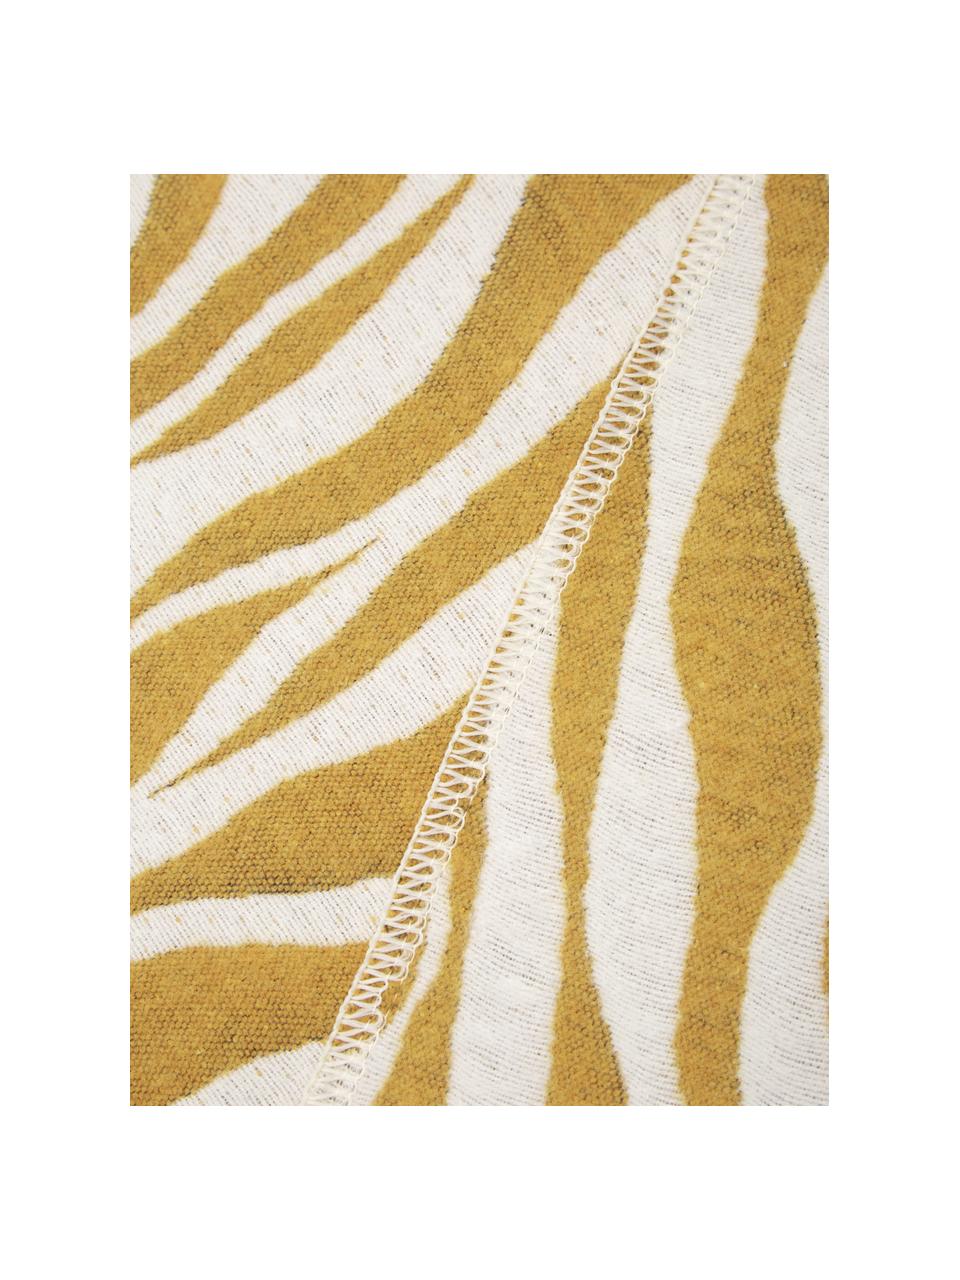 Plaid Sana met zebrapatroon, Weeftechniek: jacquard, Mosterdgeel, wit, 140 x 180 cm